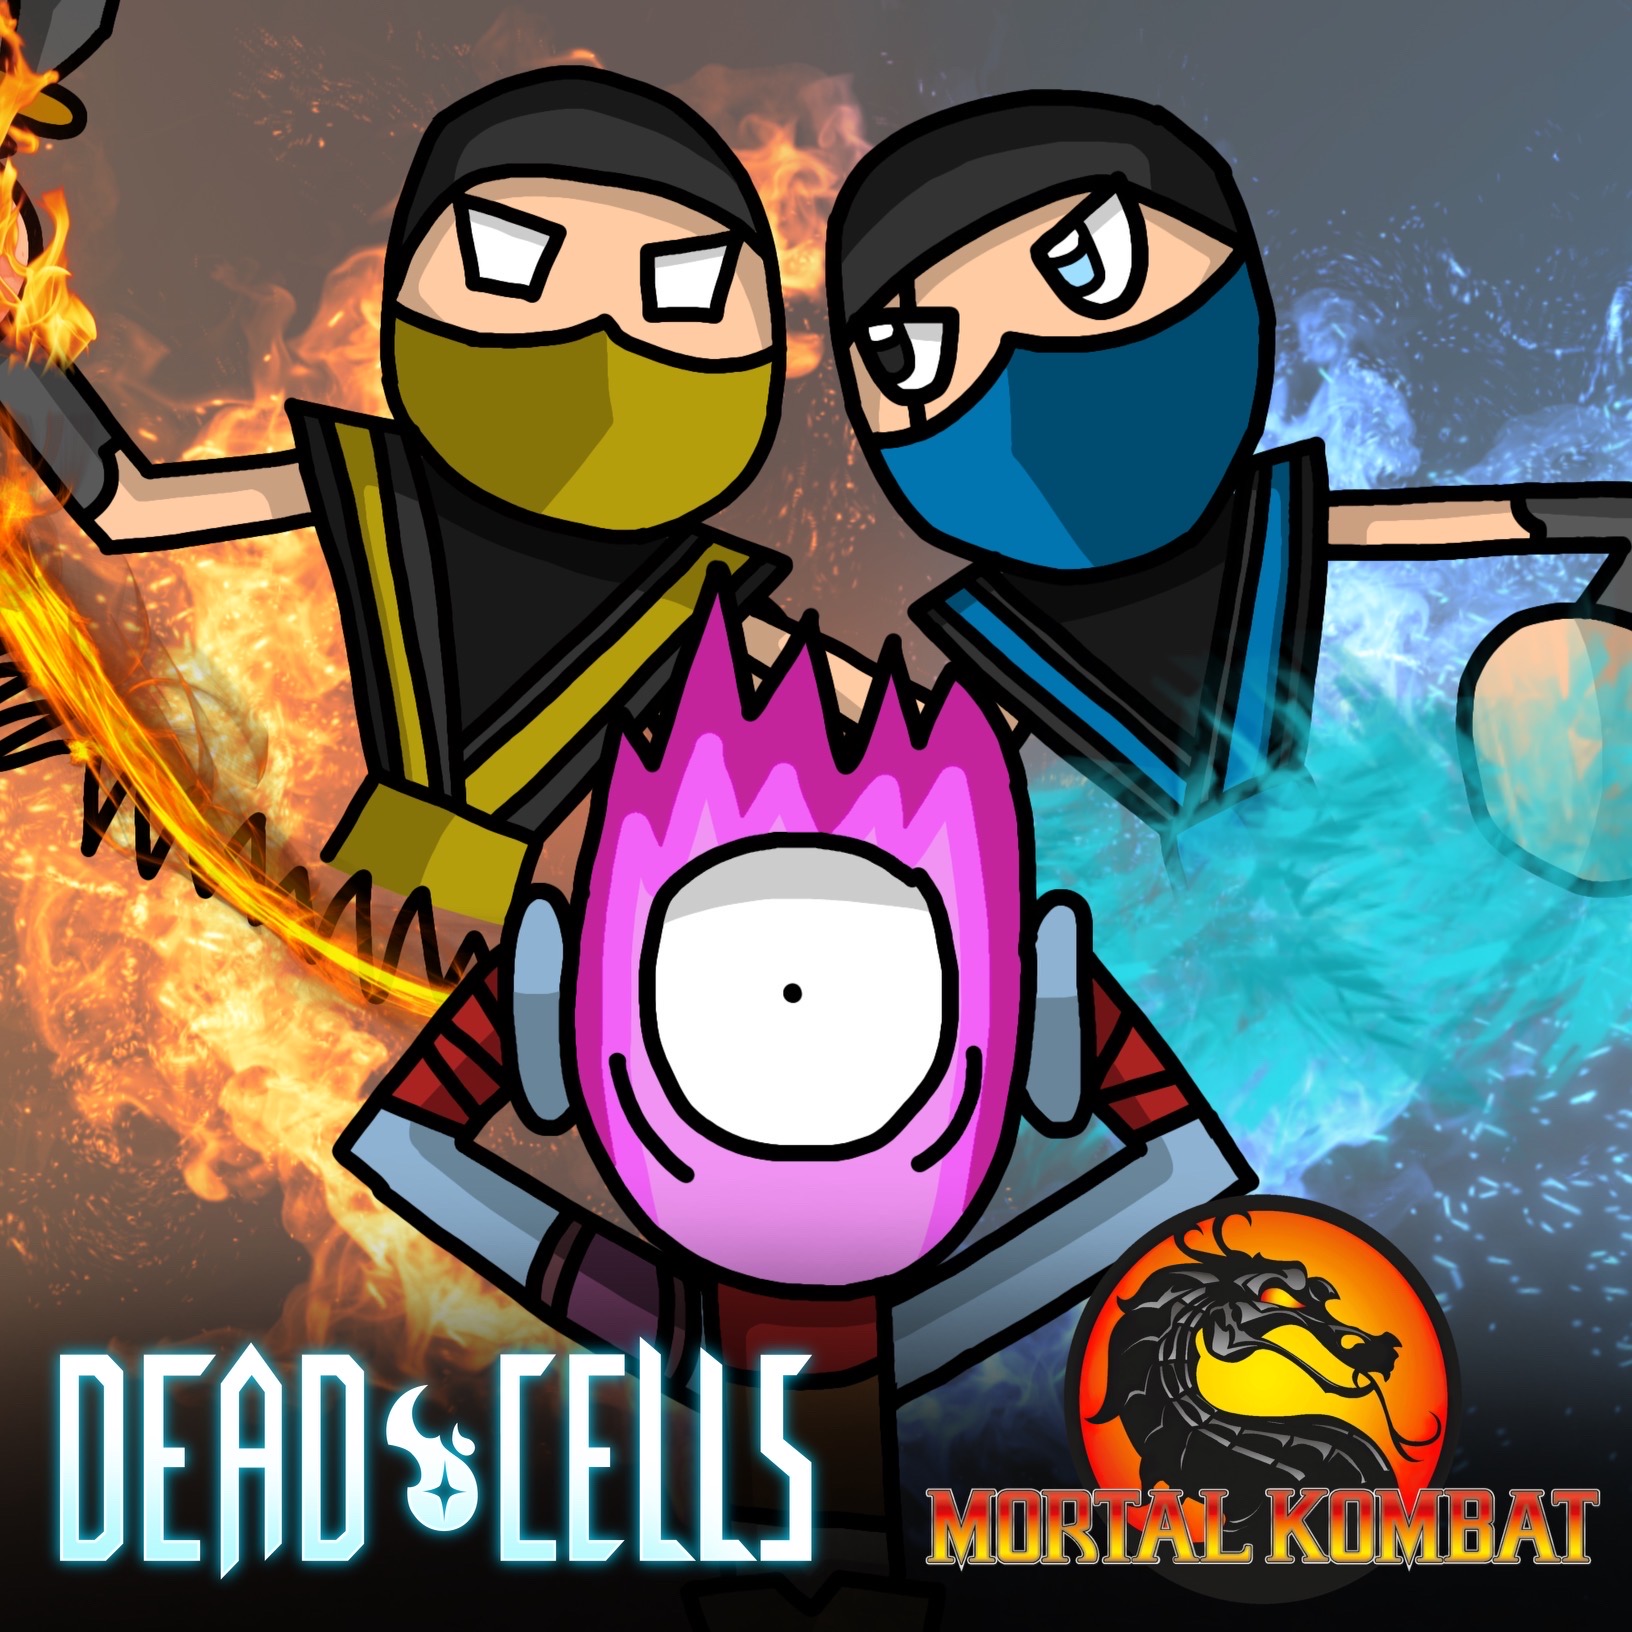 Mortal Kombat Legend Characters by MnstrFrc on DeviantArt